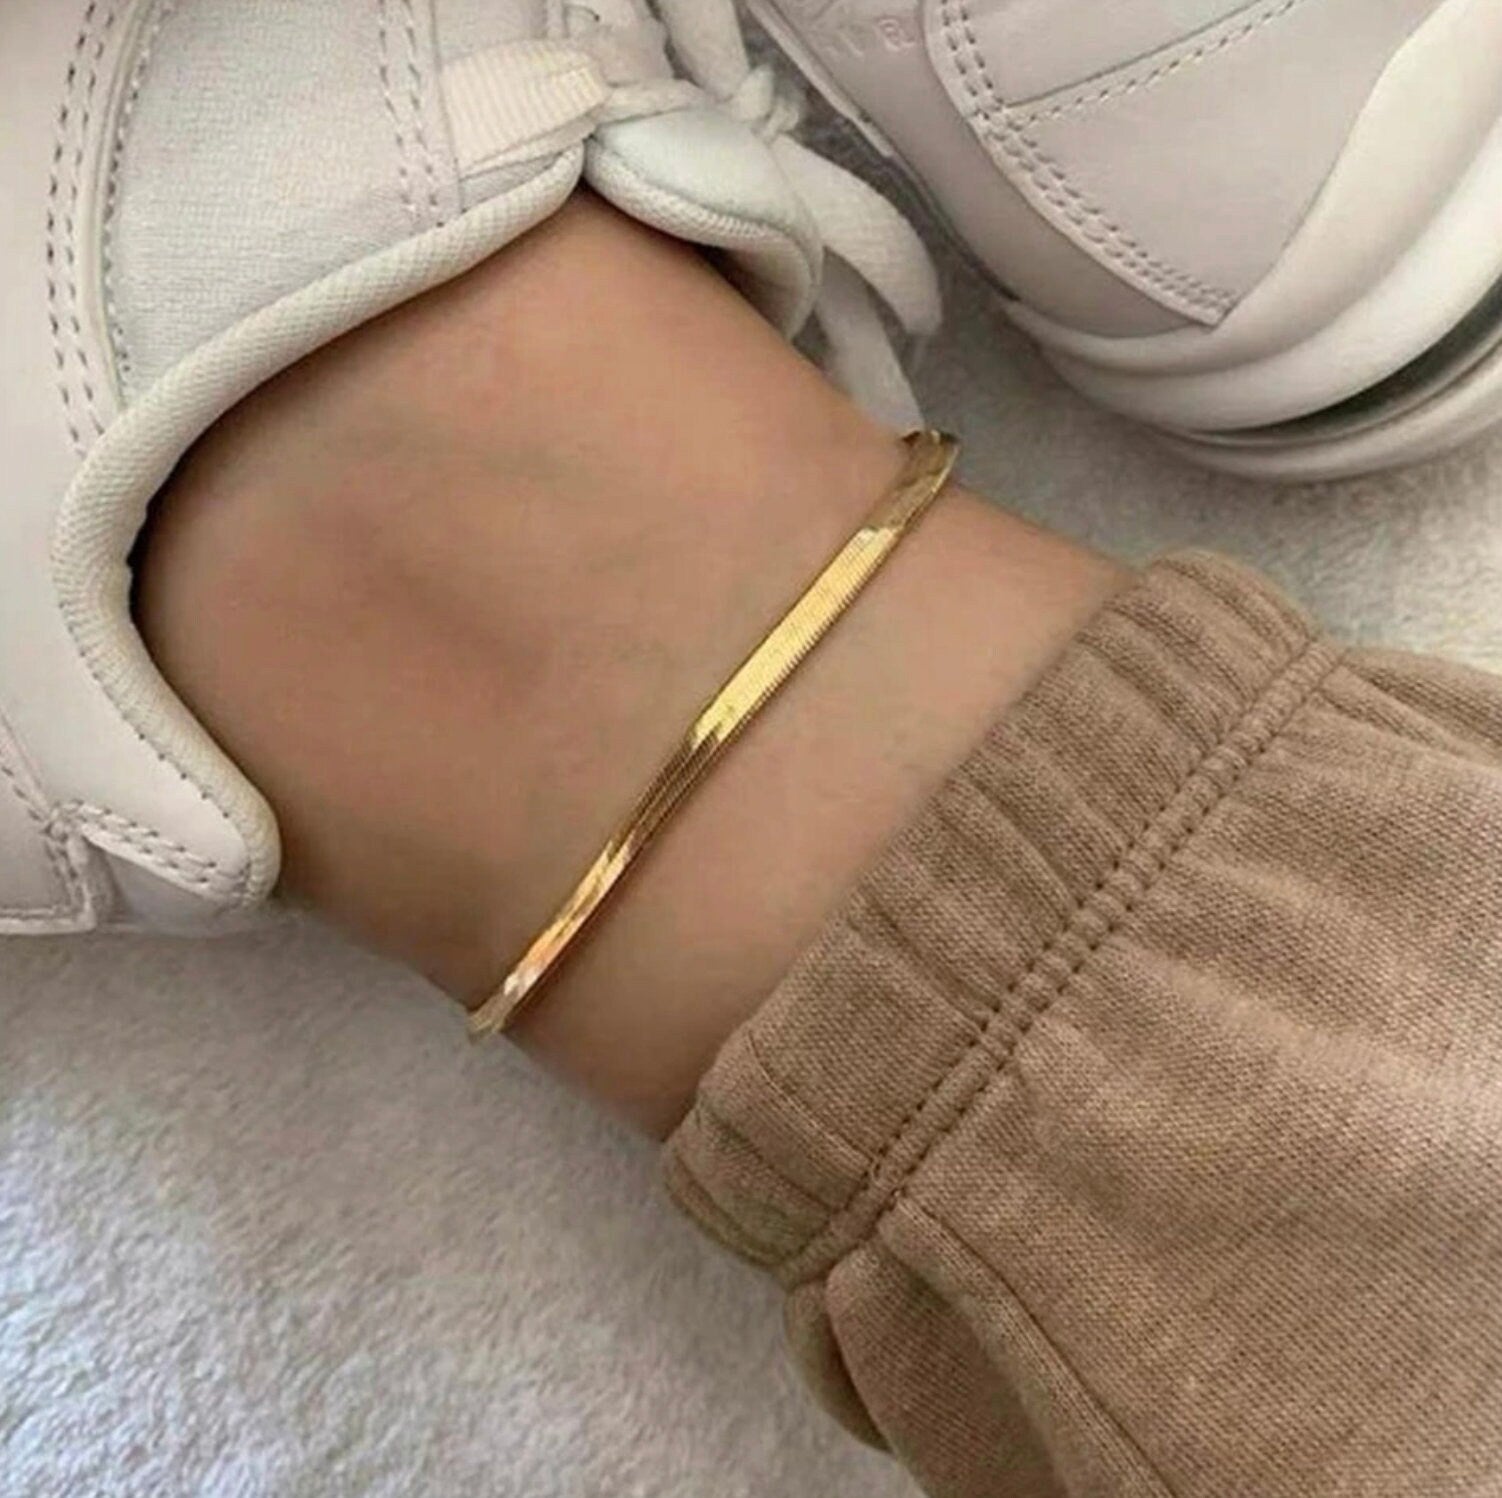 Snake Chain Gold Ankle Bracelet - 14k Gold Plated Classy Ankle Bracelet - Water and Tarnish Resistant Chain - Anklet for Women Men Unisex